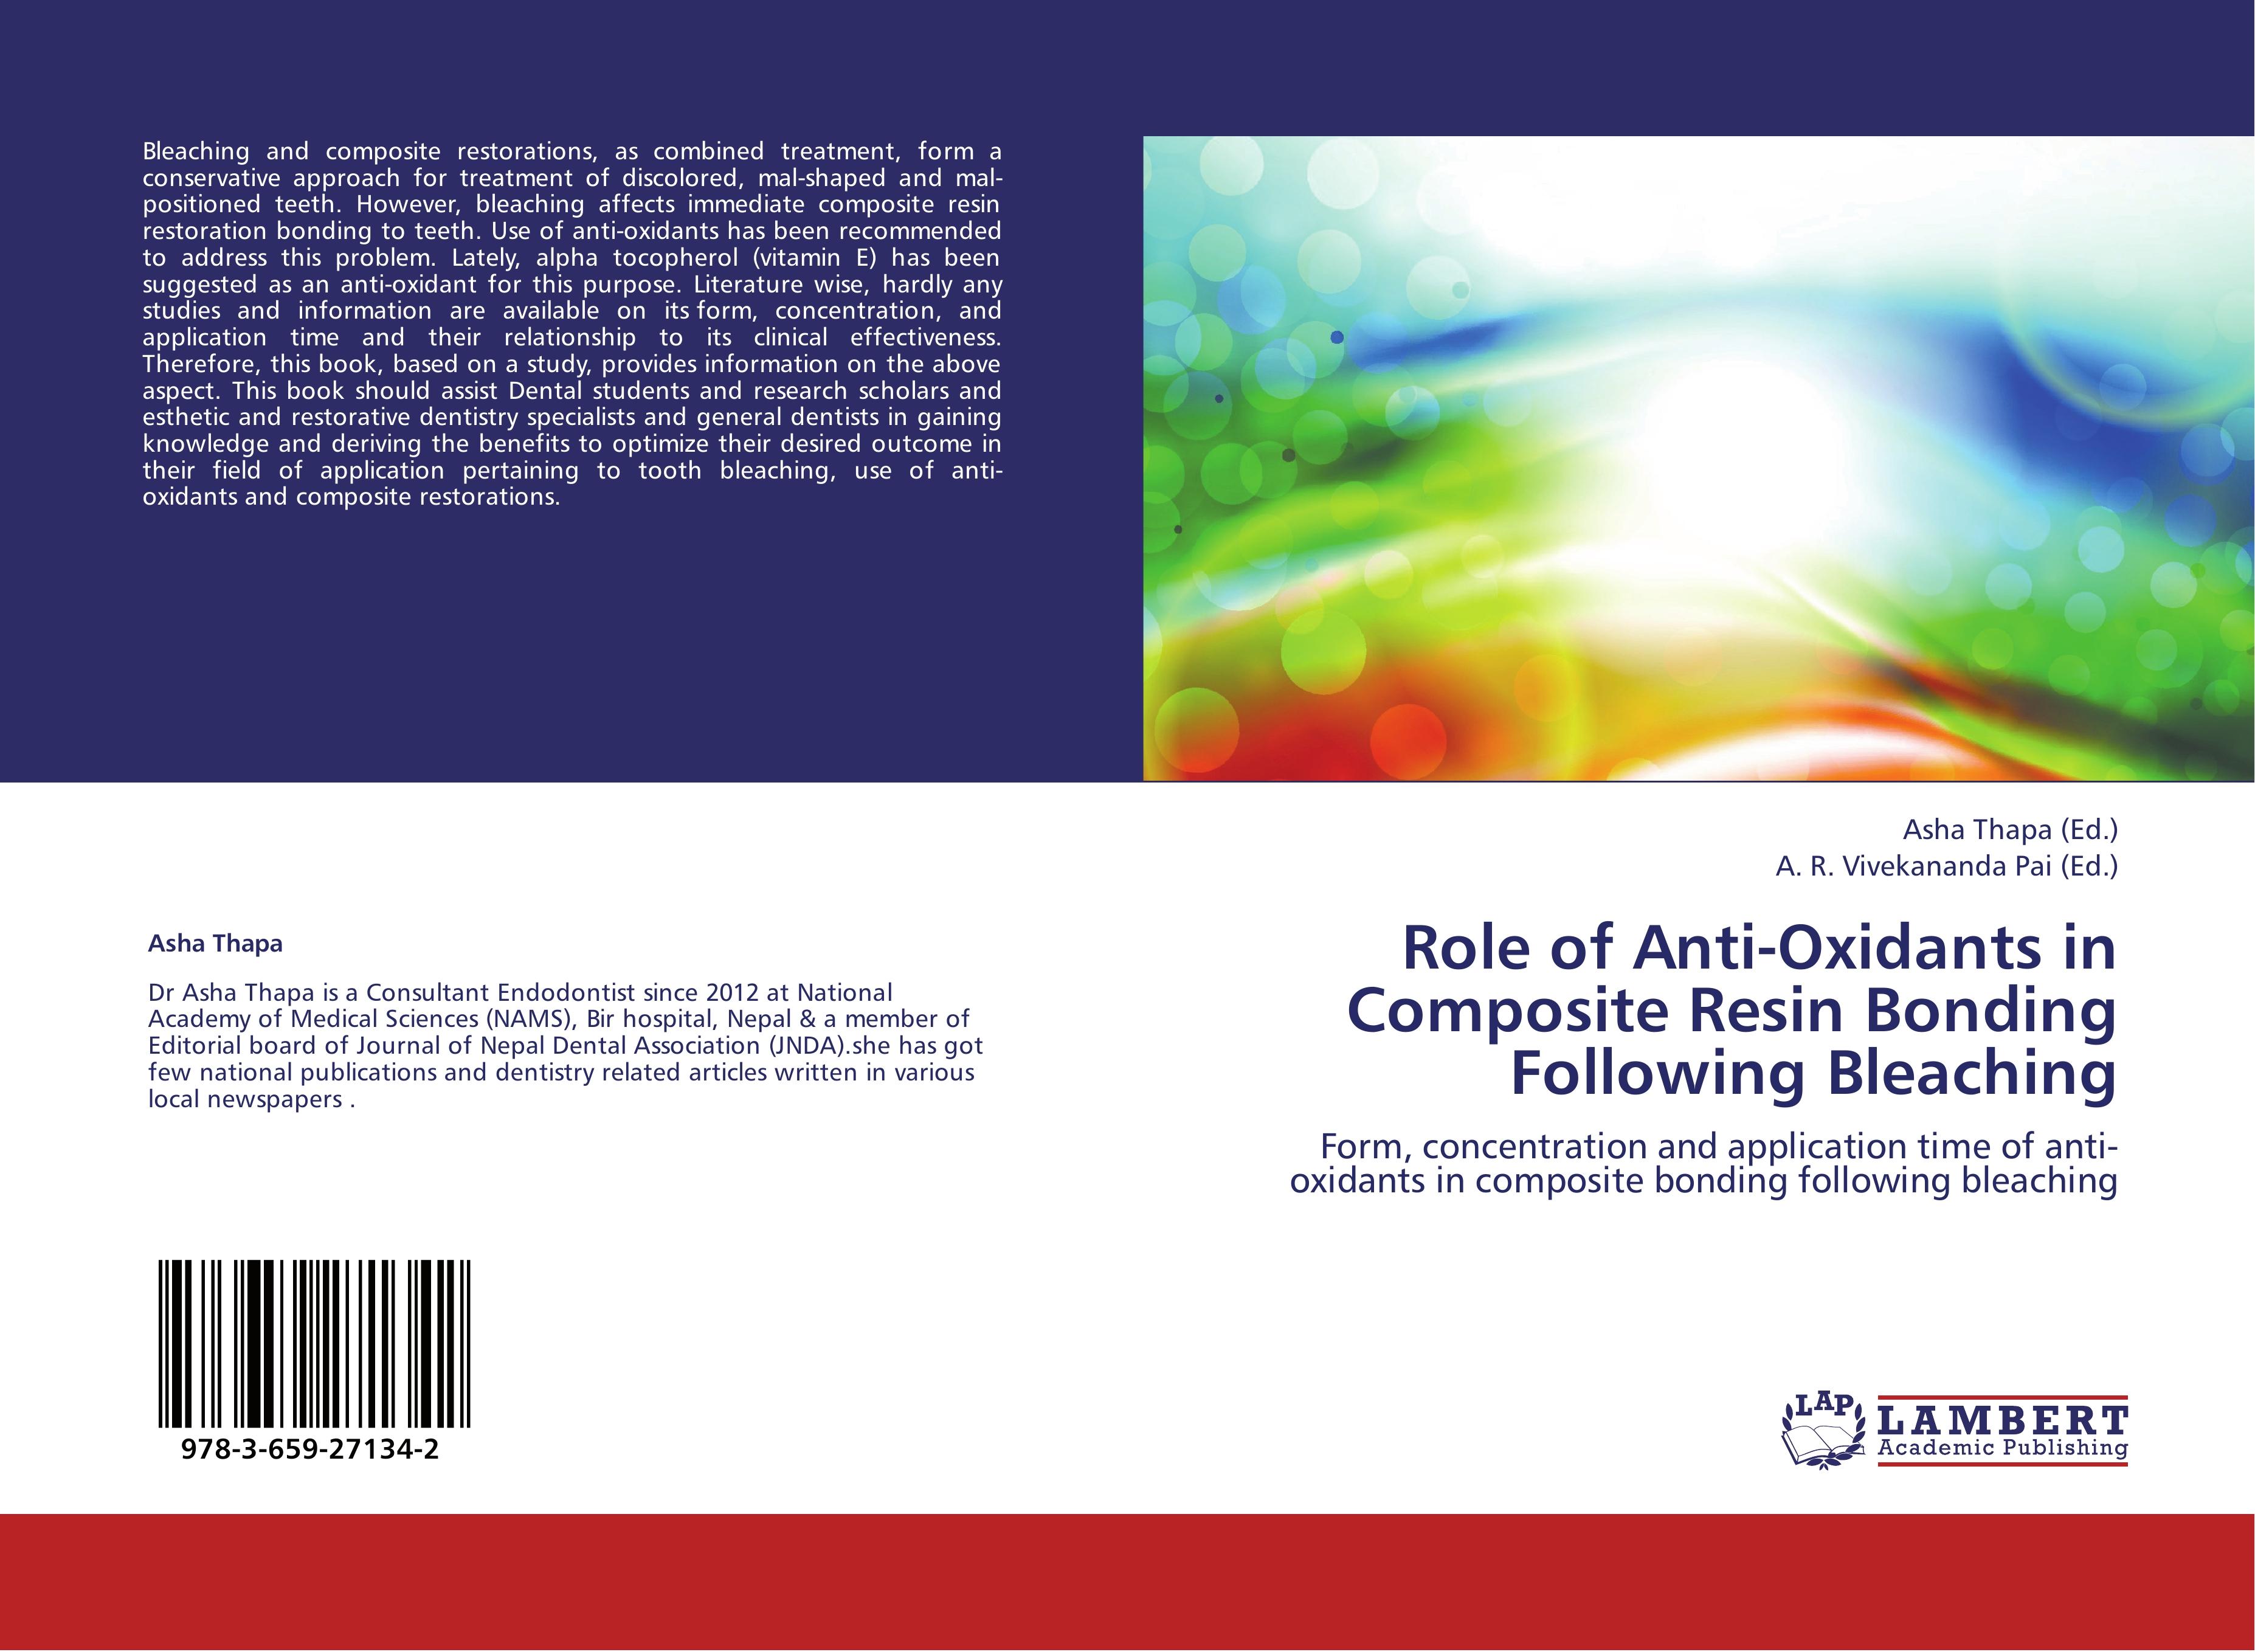 Role of Anti-Oxidants in Composite Resin Bonding Following Bleaching - Asha Thapa A. R. Vivekananda Pai